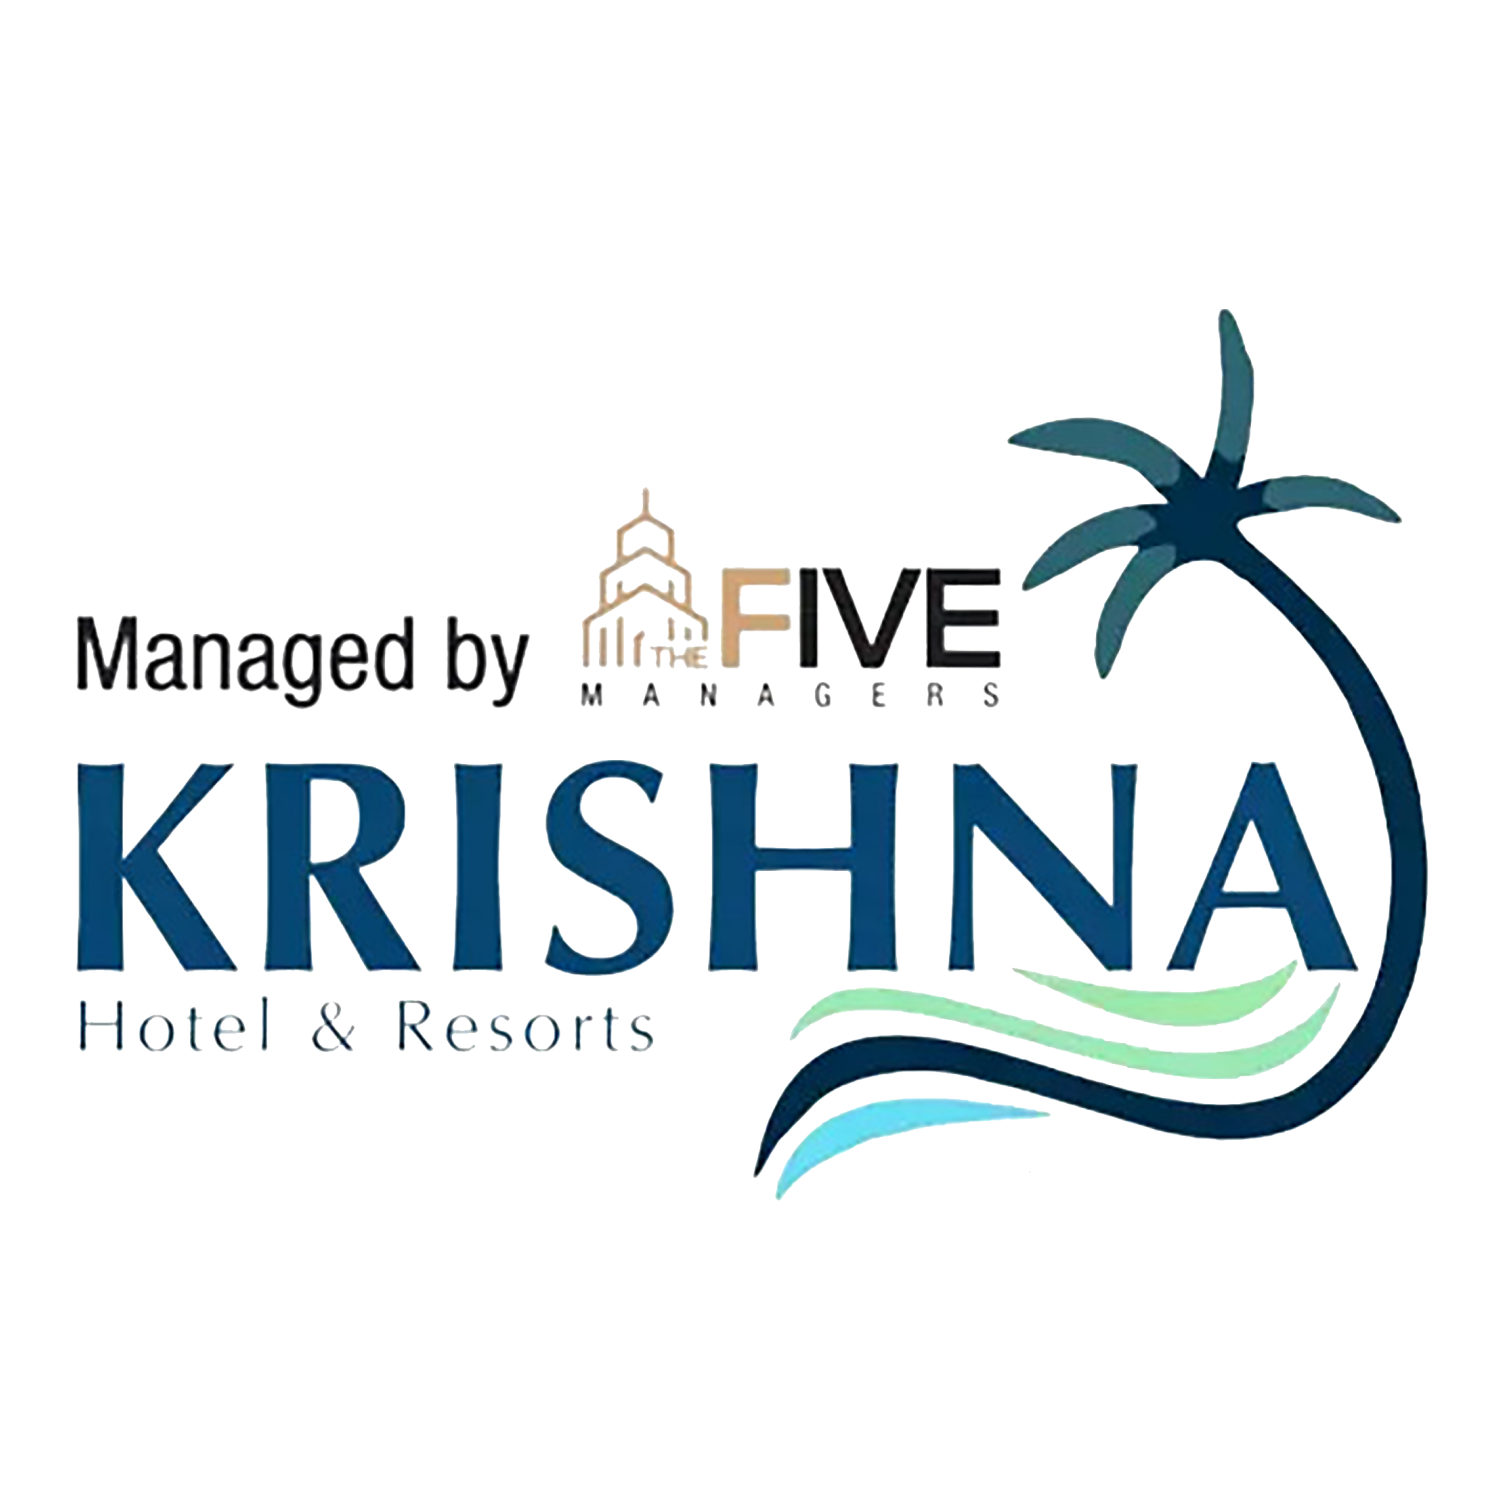 Krishna Hotel and Resort|Resort|Accomodation